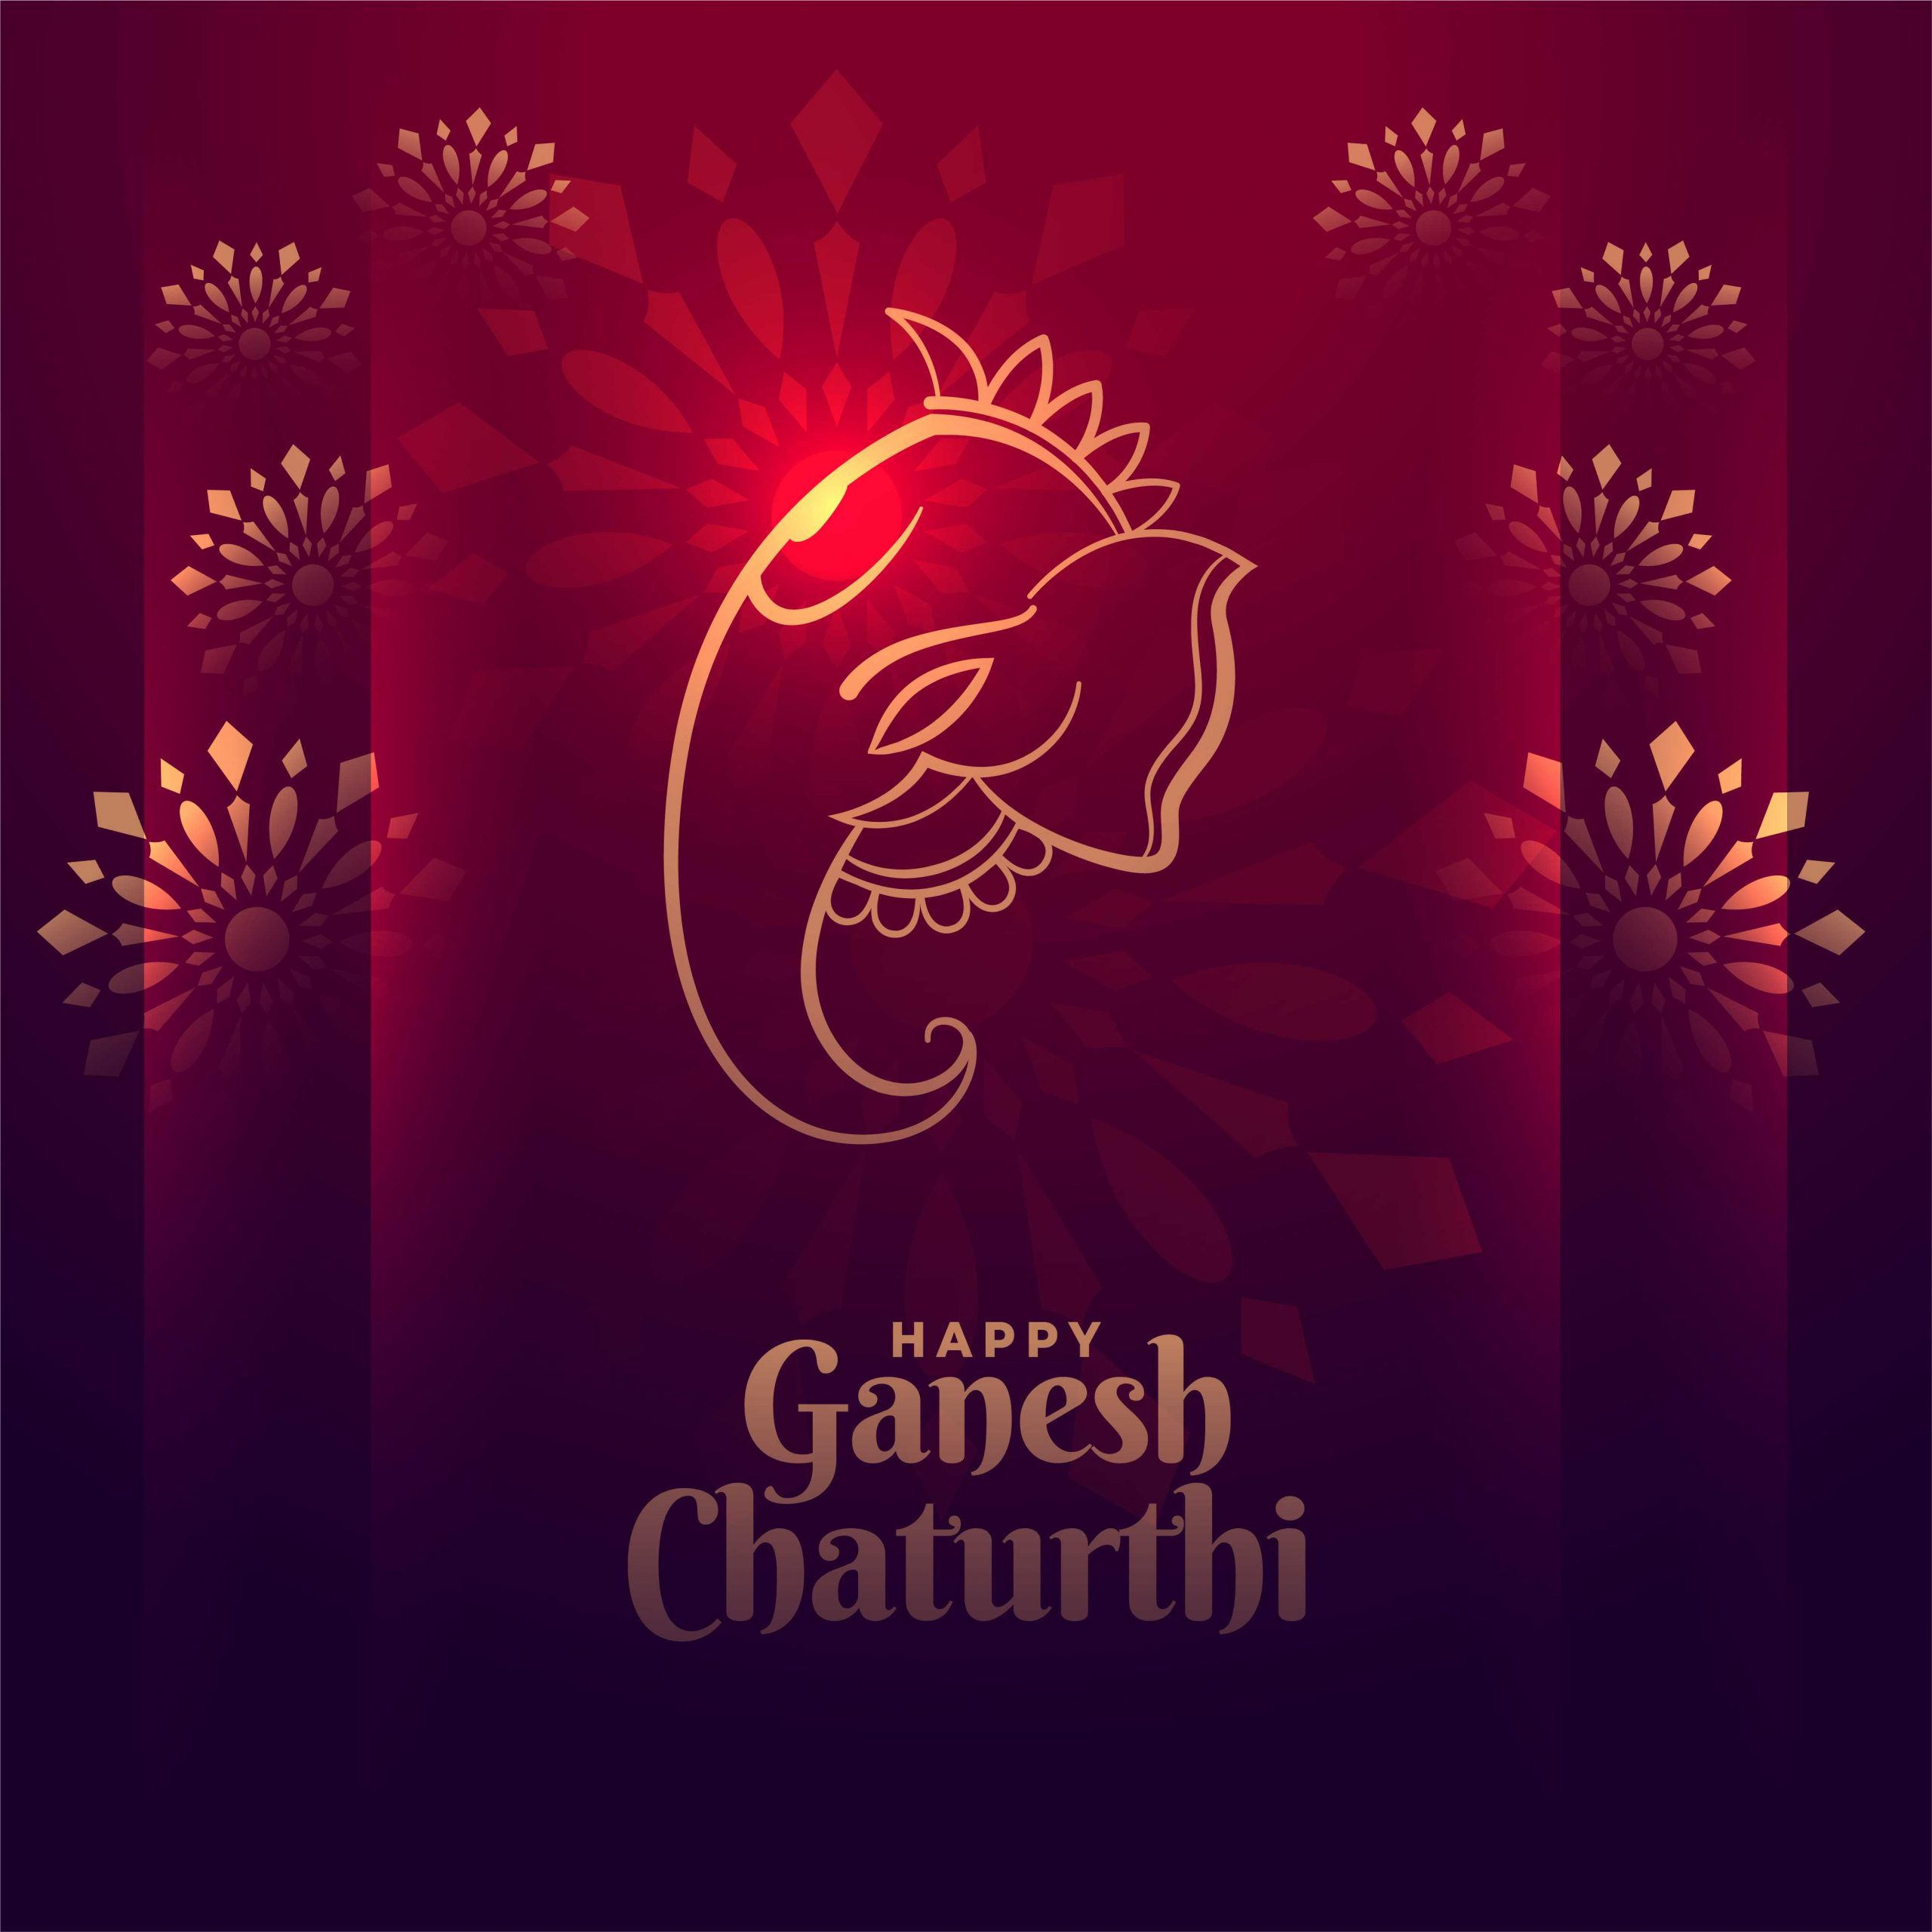 Ganesh Chaturthi pics download